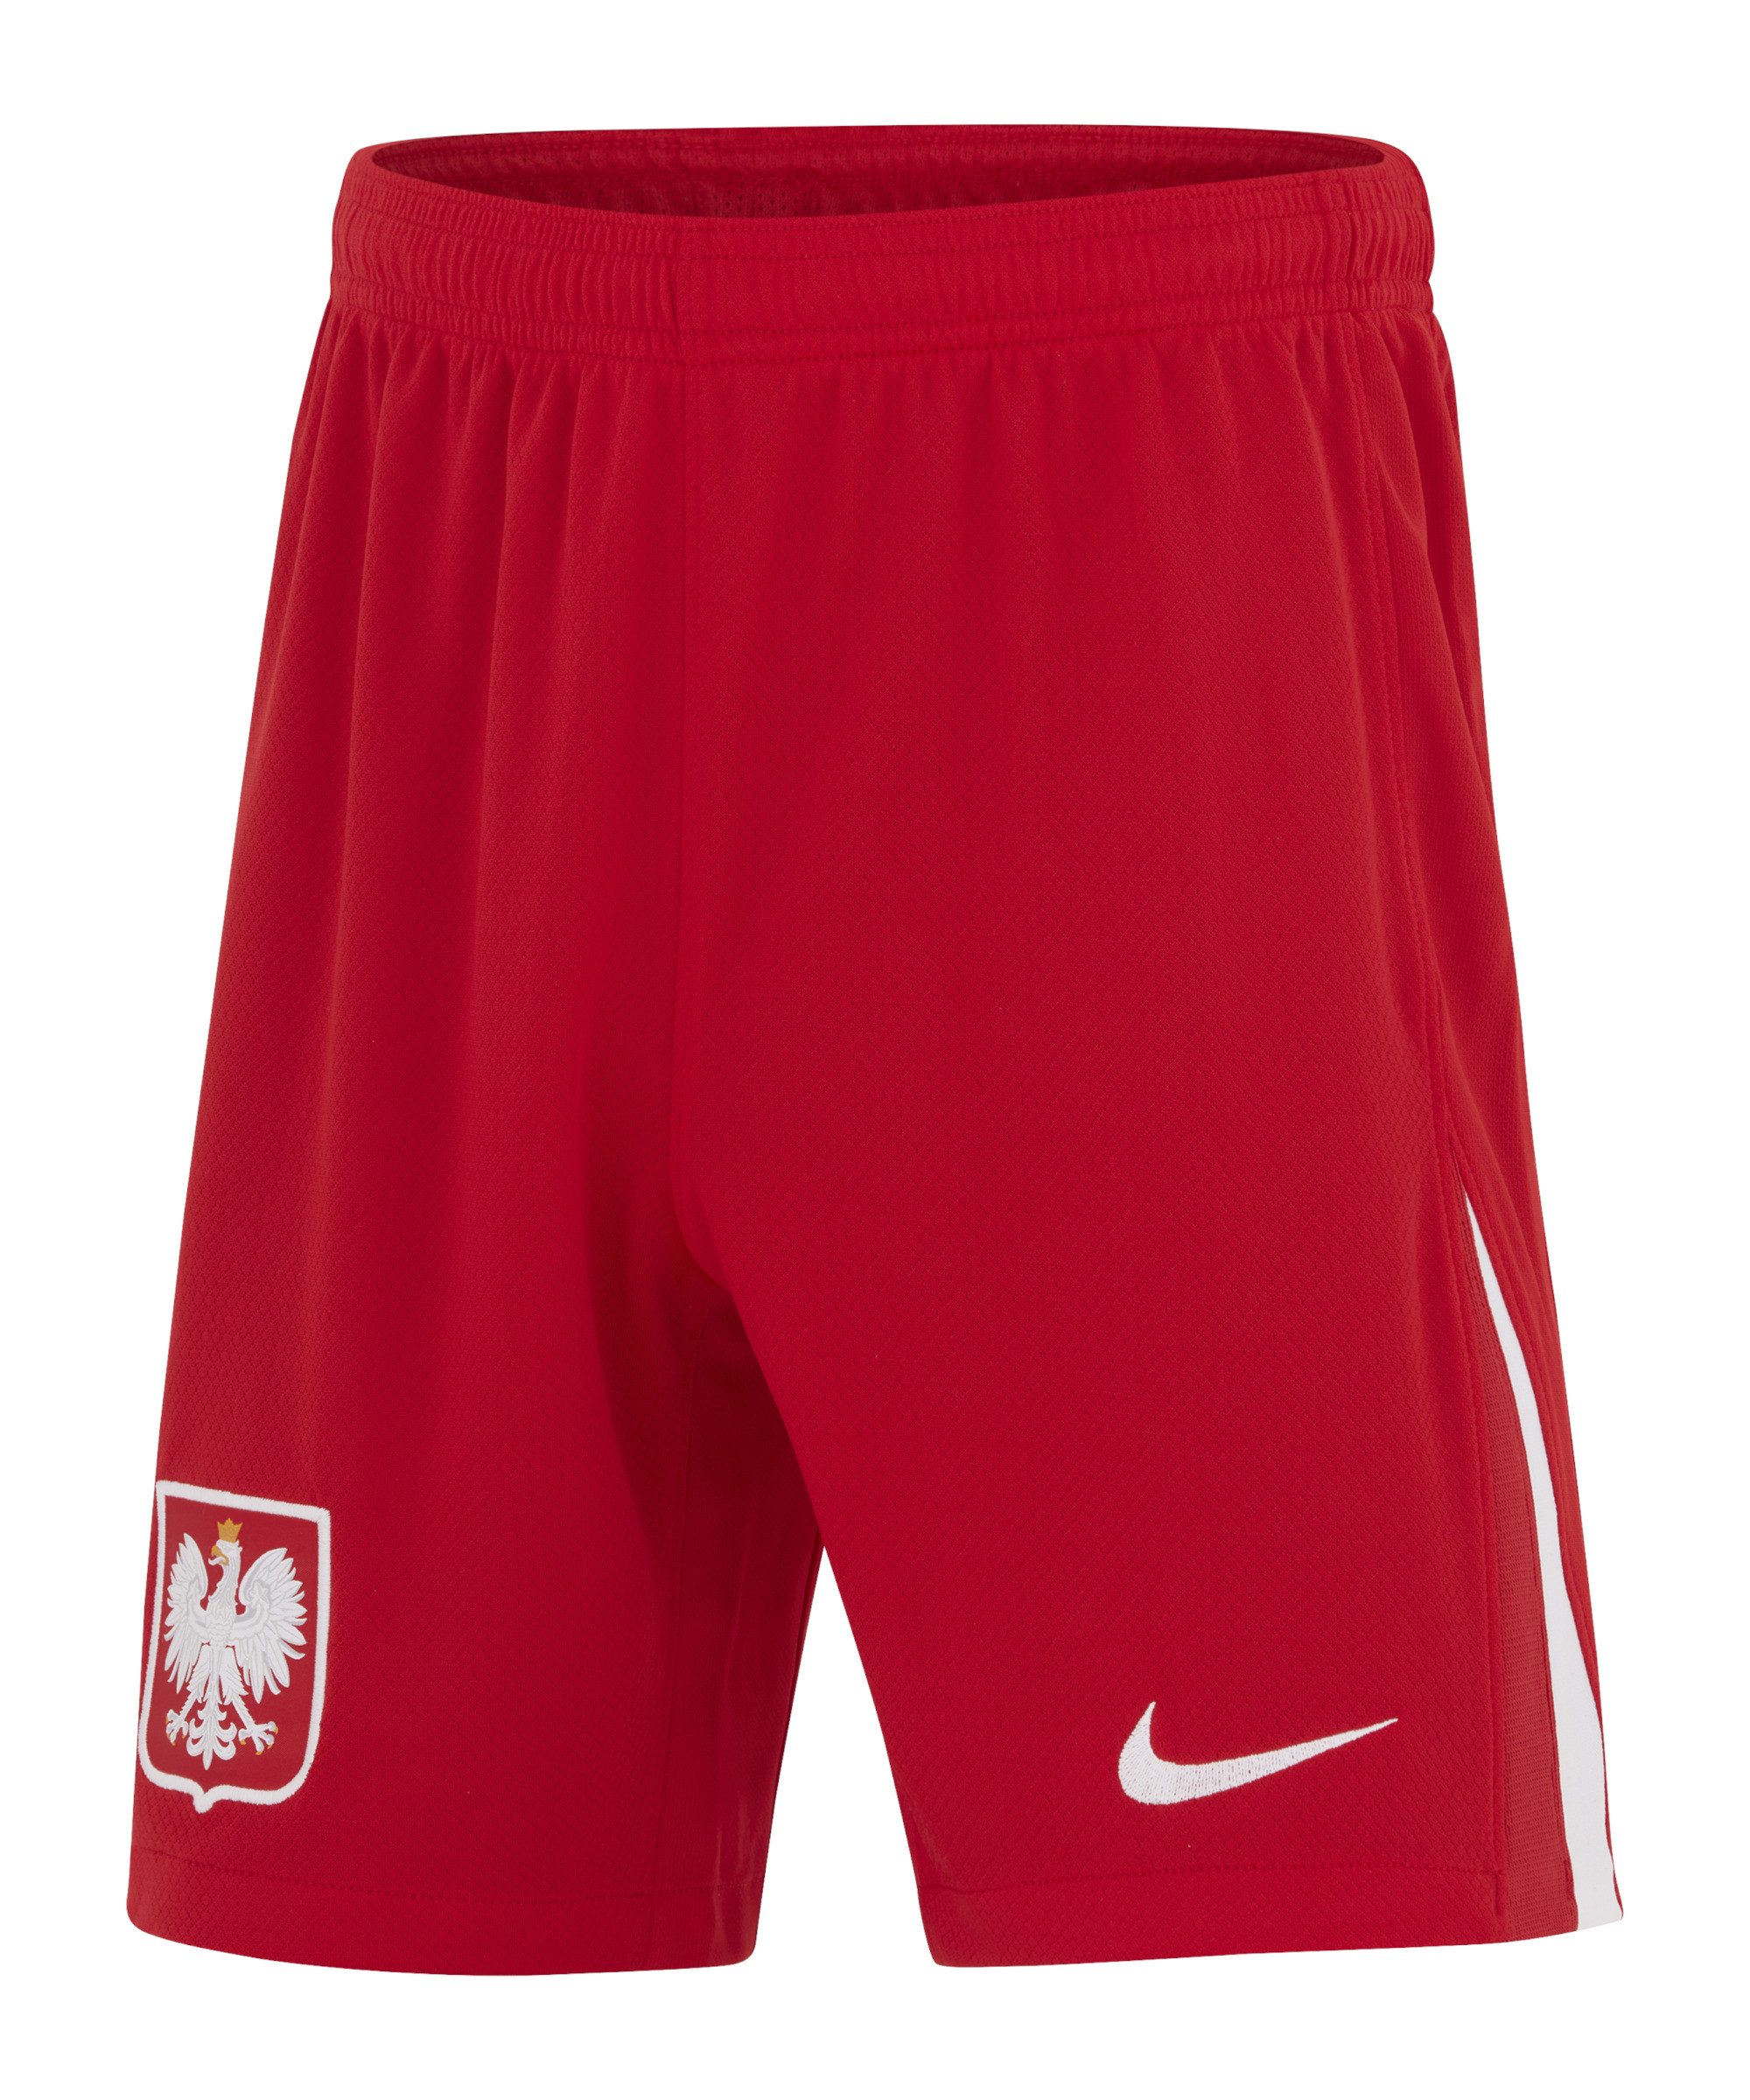 Nike Sporthose Polen Short Kids